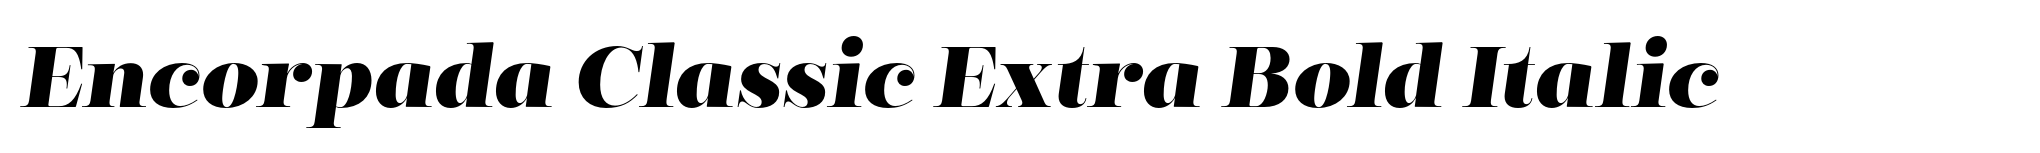 Encorpada Classic Extra Bold Italic image